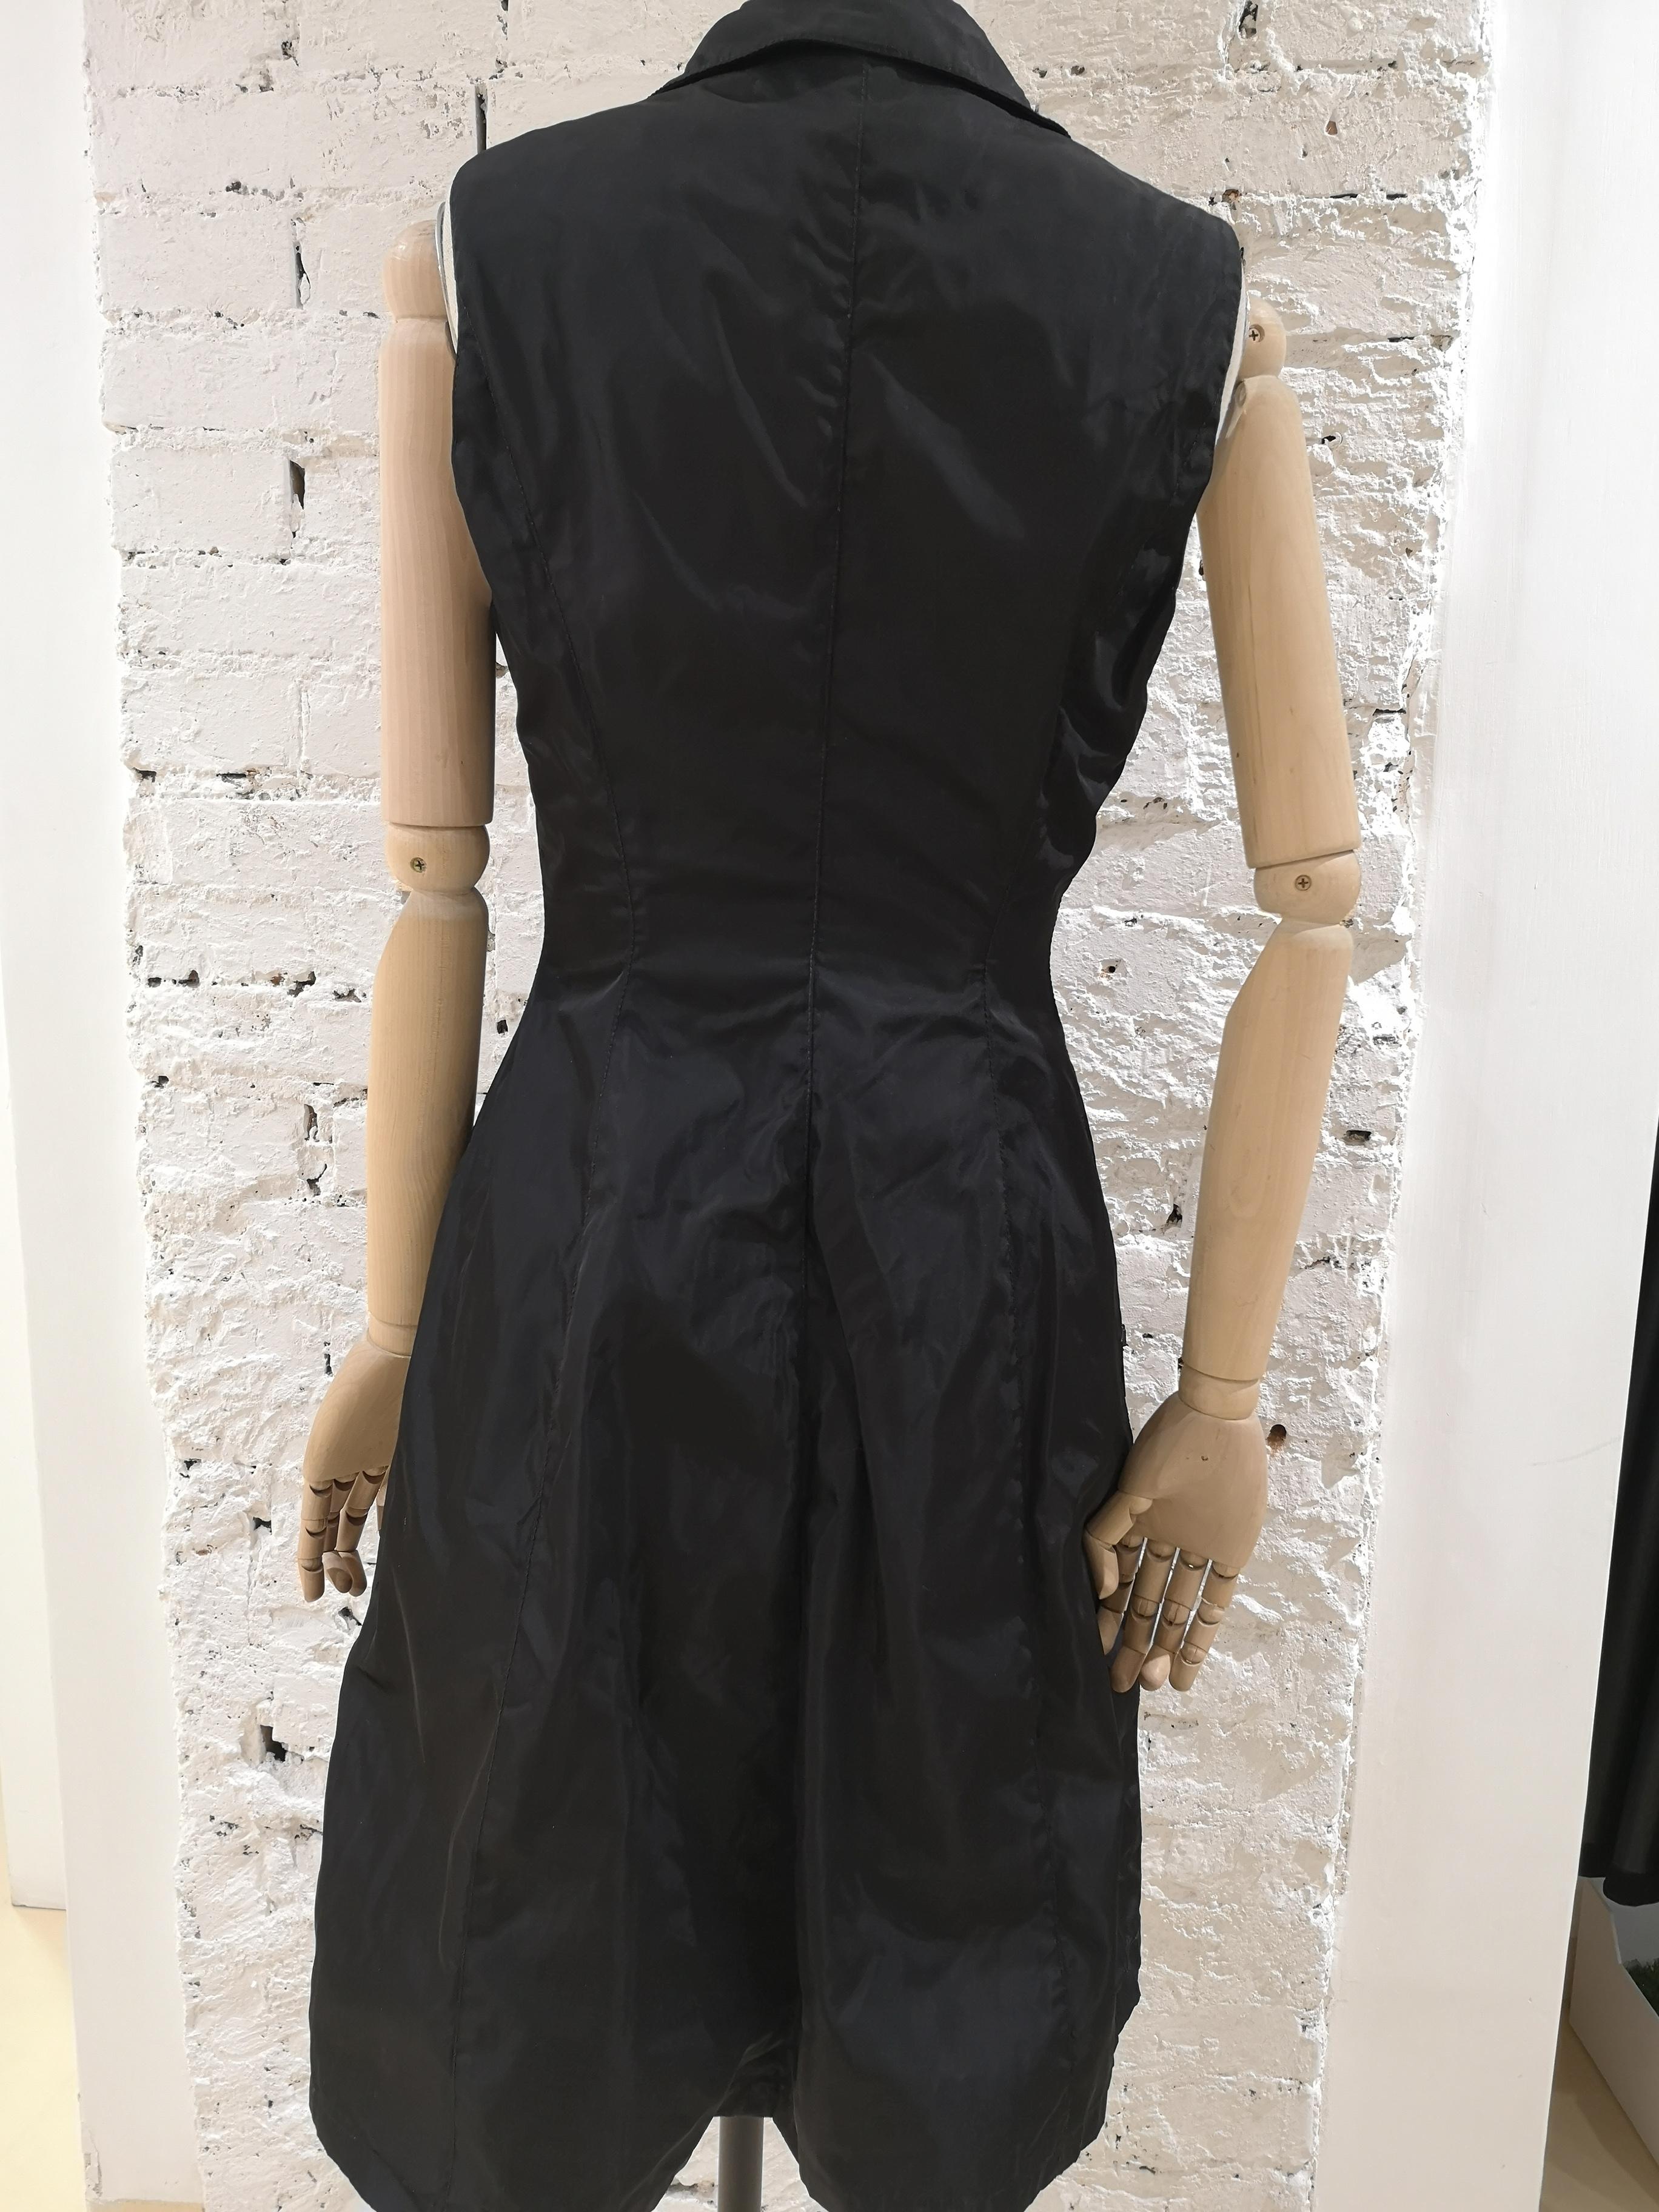 Prada Black Dress 10